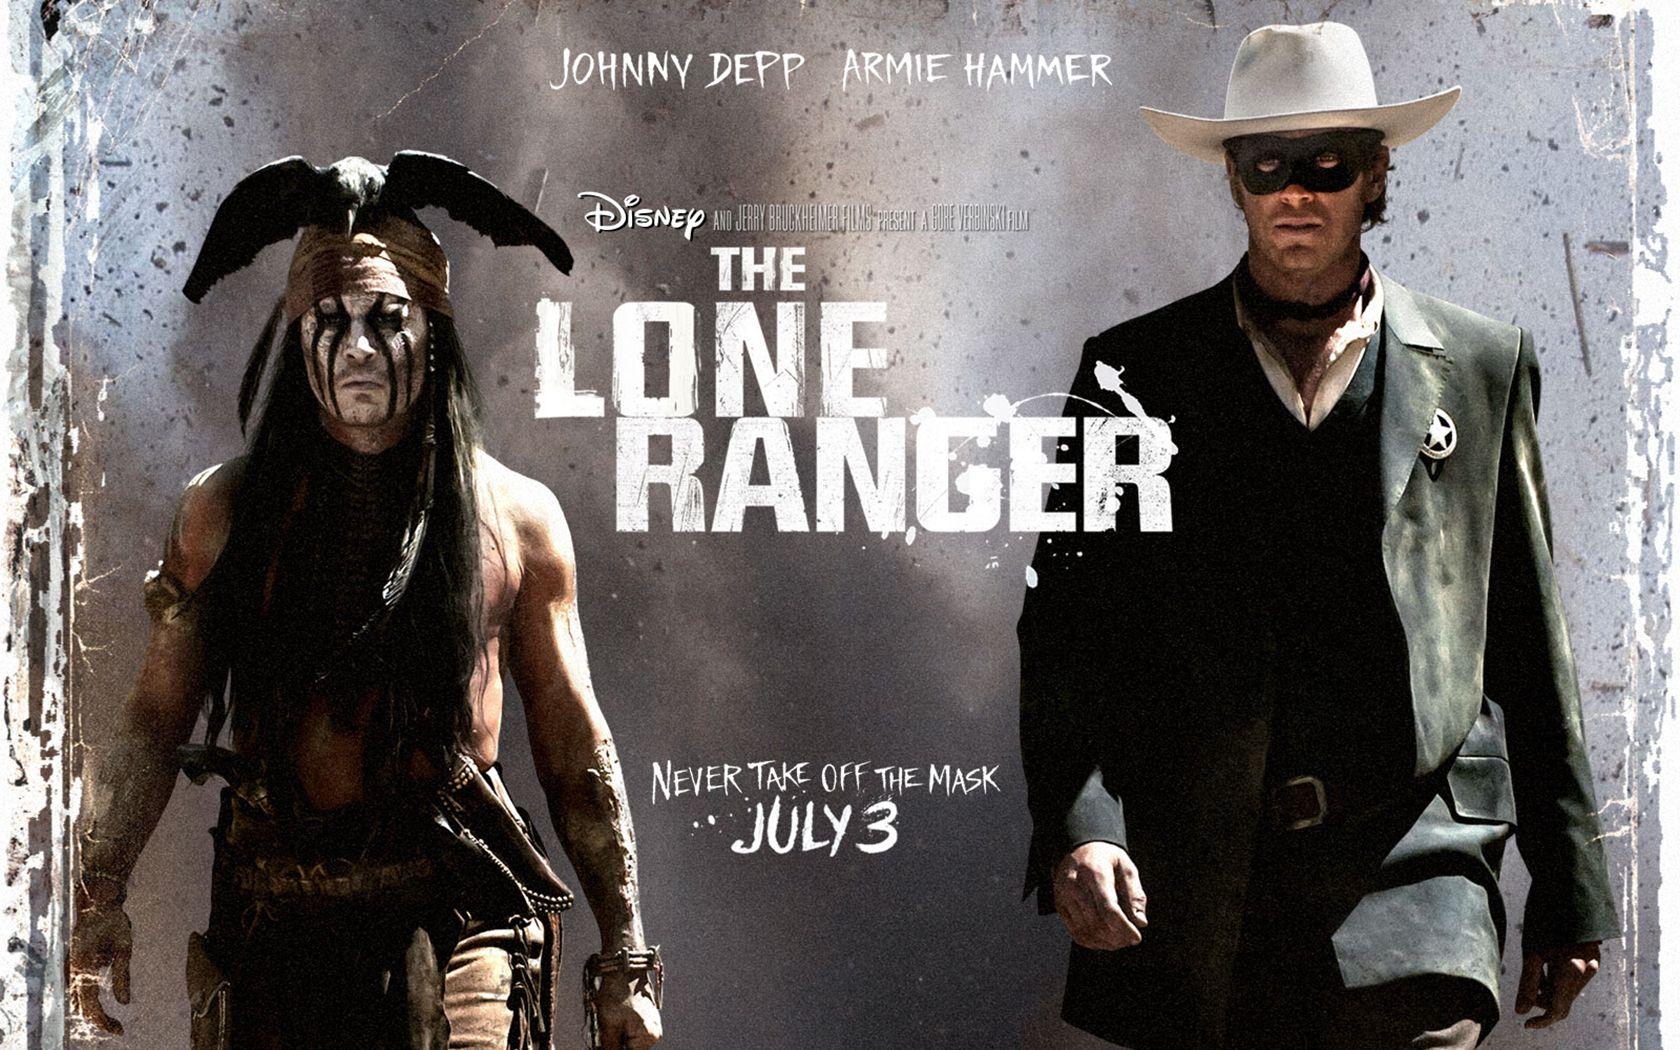 The Lone Ranger Movie Poster wallpaper. The Lone Ranger Movie